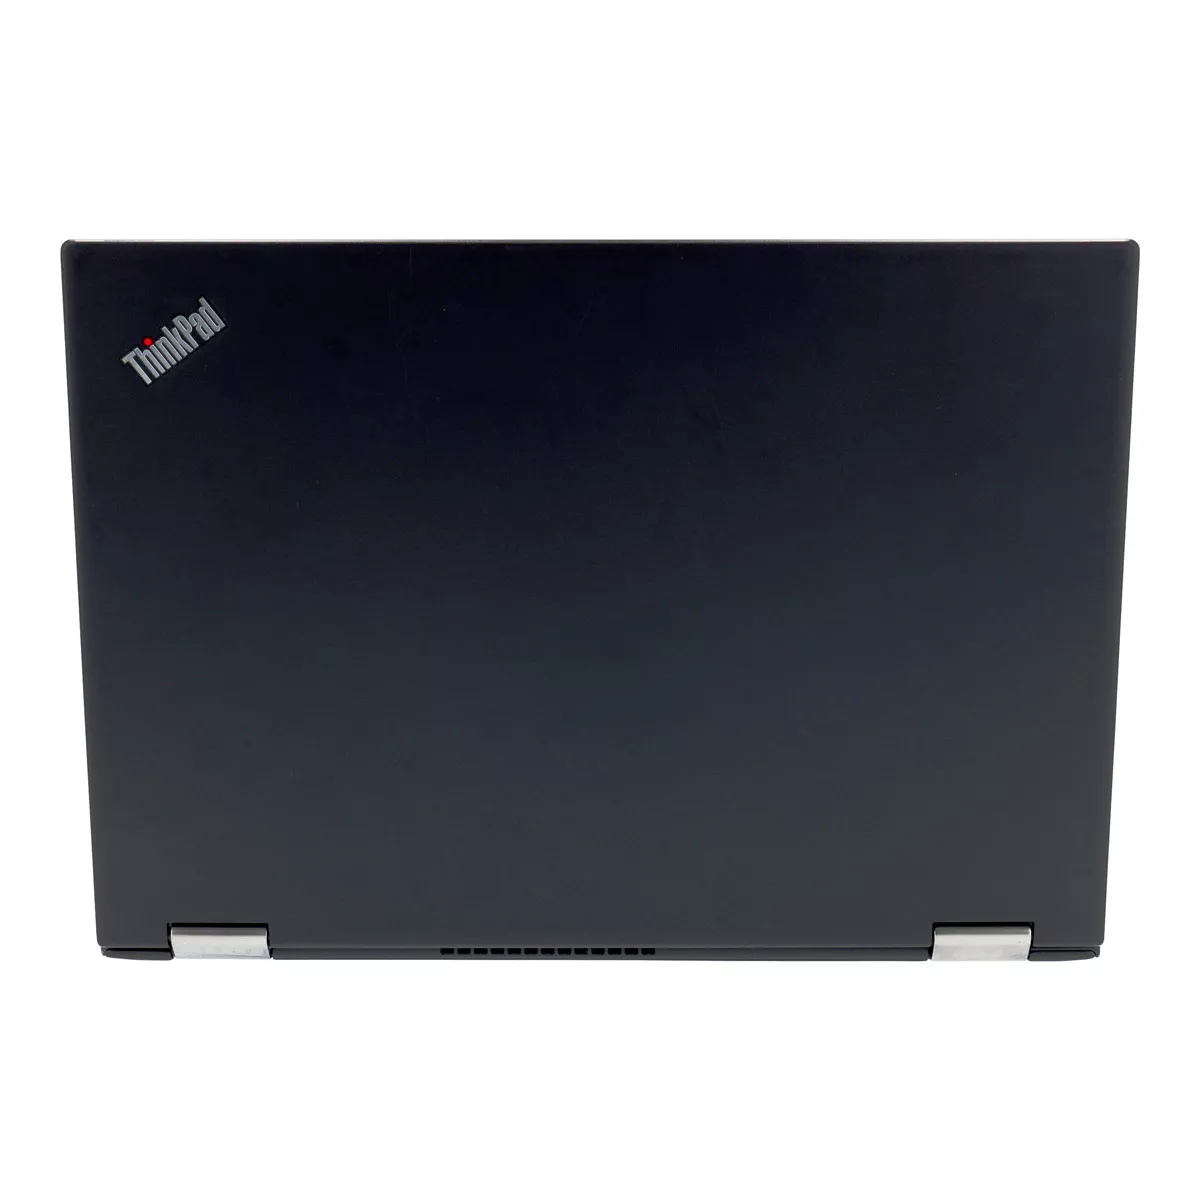 Lenovo ThinkPad X380 Yoga Core i5 8250U Touch 8 GB DDR4 240 GB M.2 SSD Webcam B